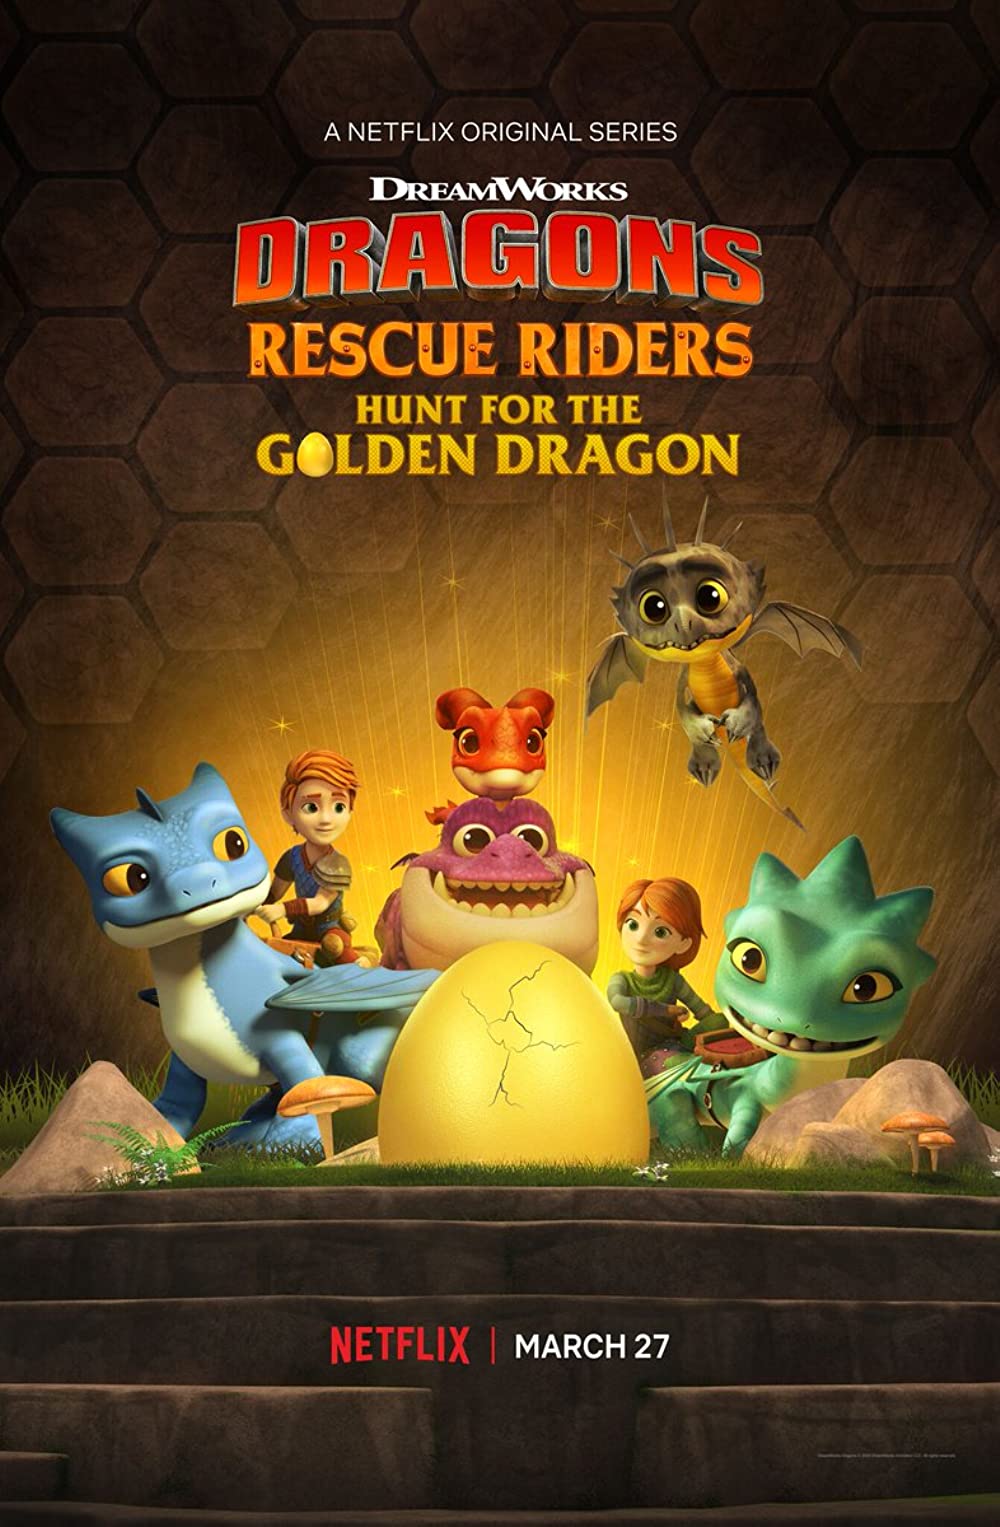 Filmbeschreibung zu Dragons: Rescue Riders: Hunt for the Golden Dragon